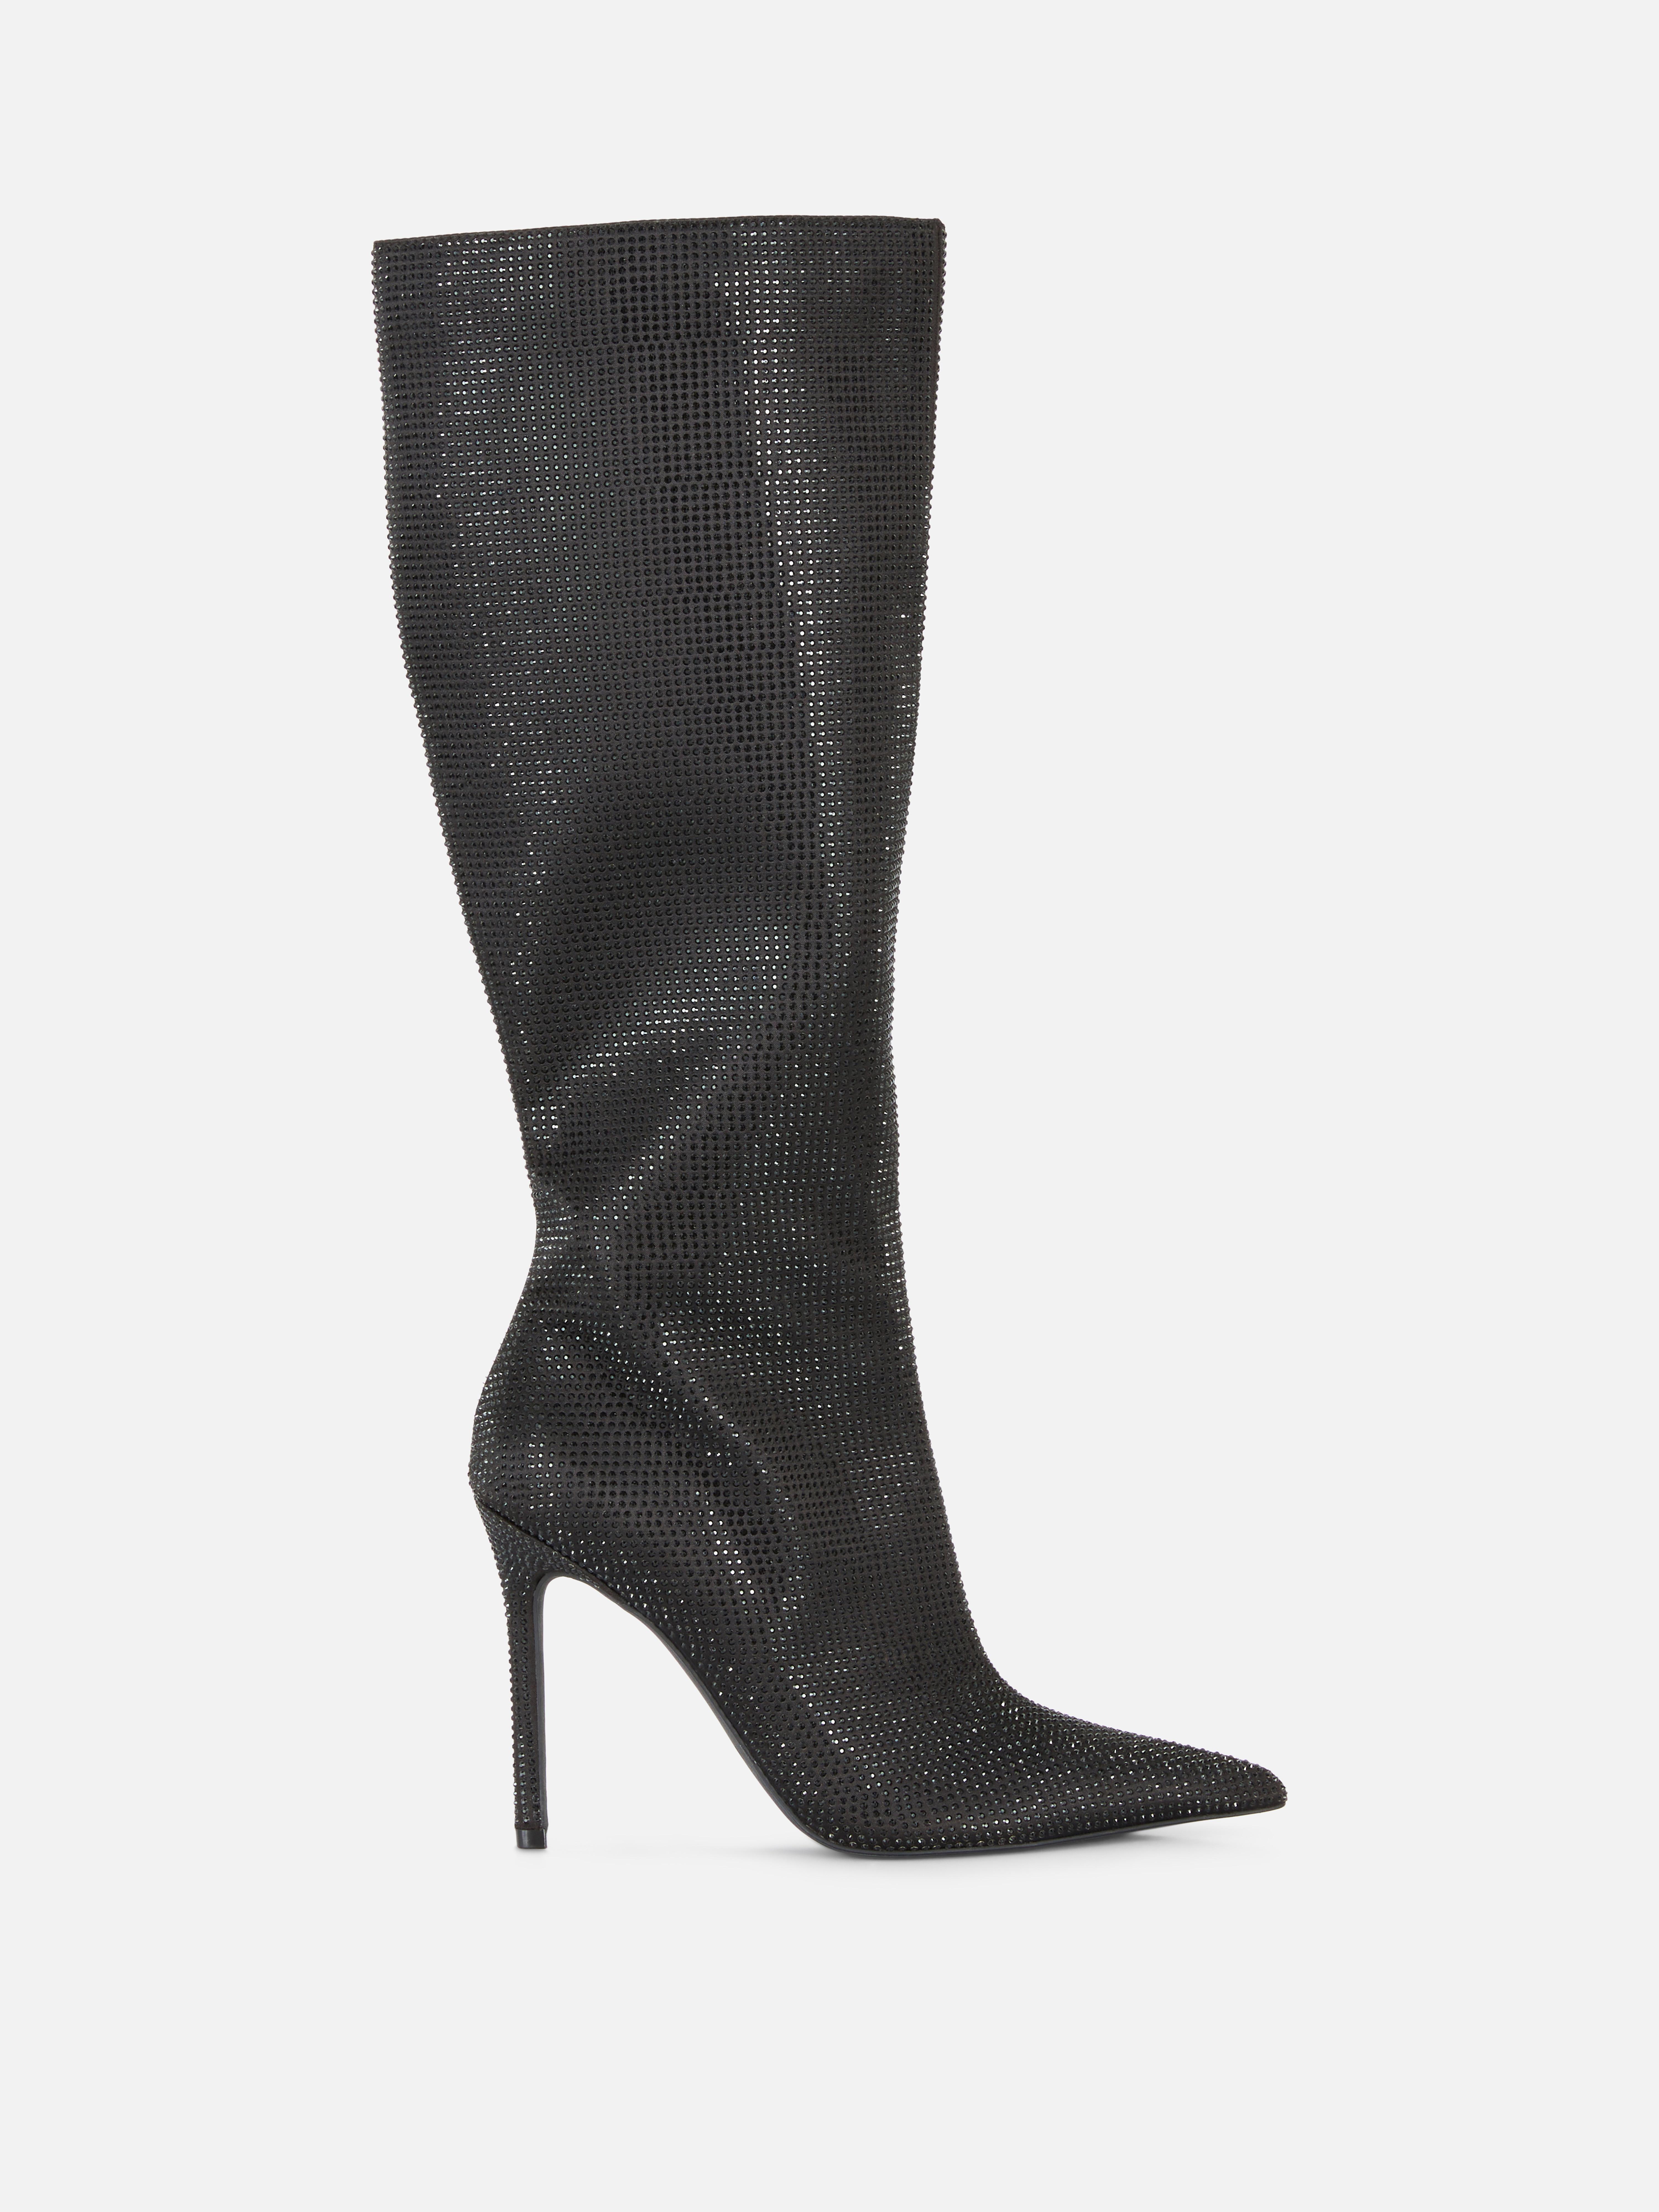 Rita Ora Diamanté Knee-High Boots